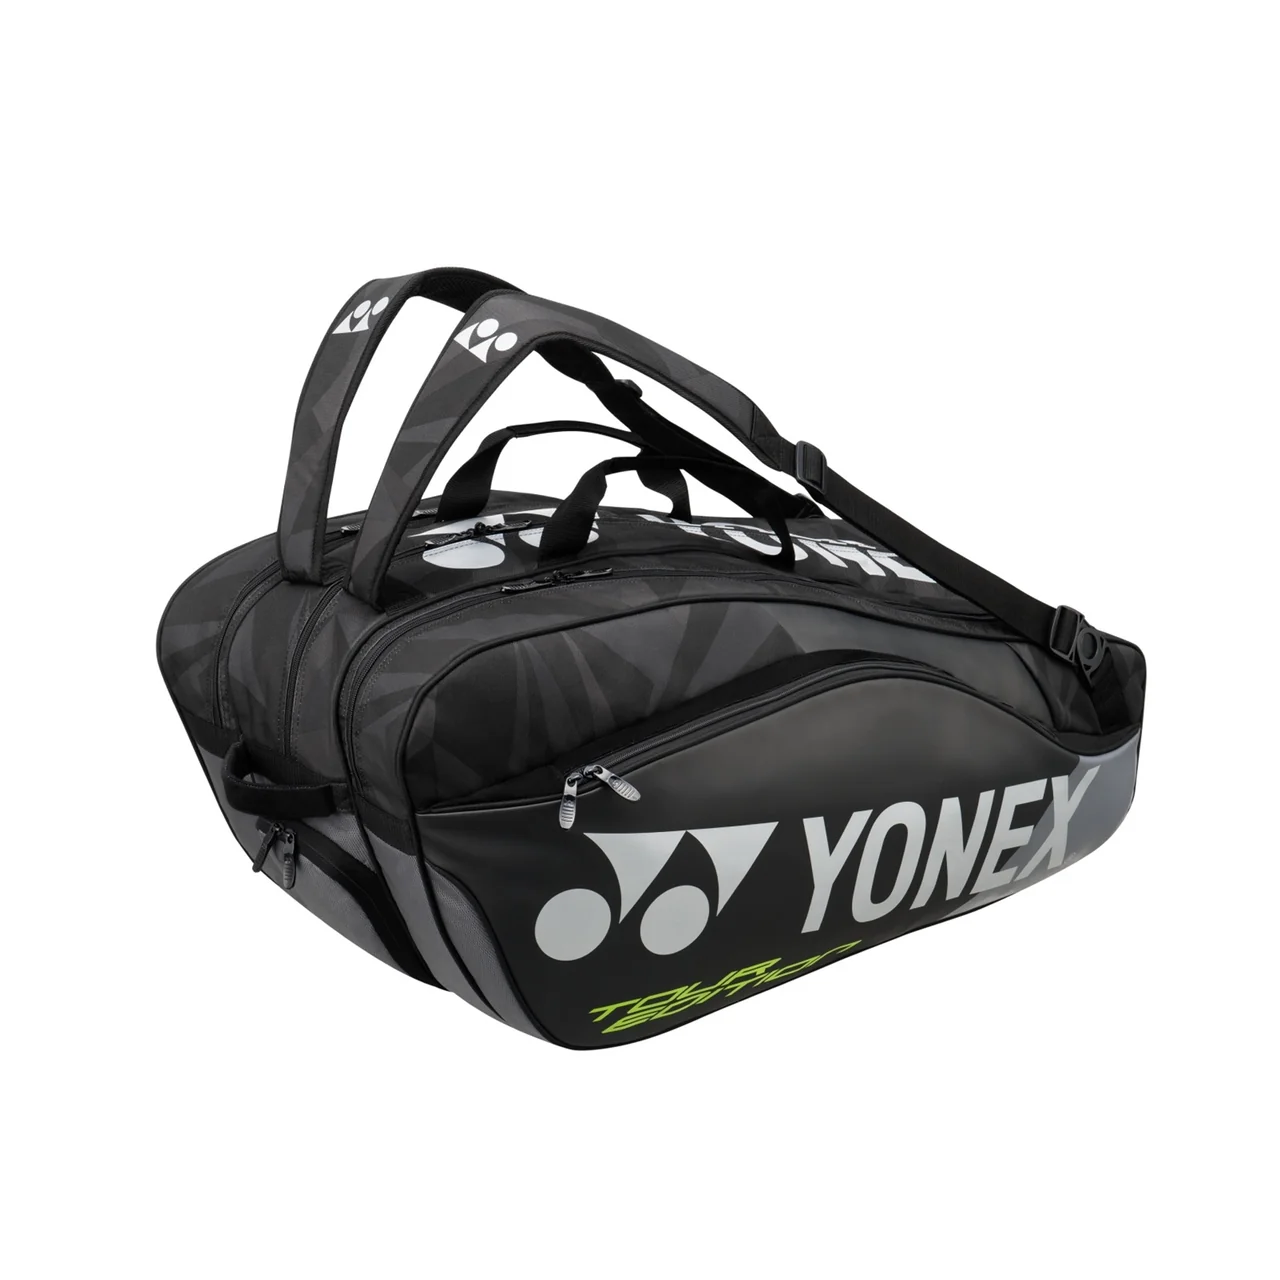 Yonex Pro Bag x9 Black Edition 2019